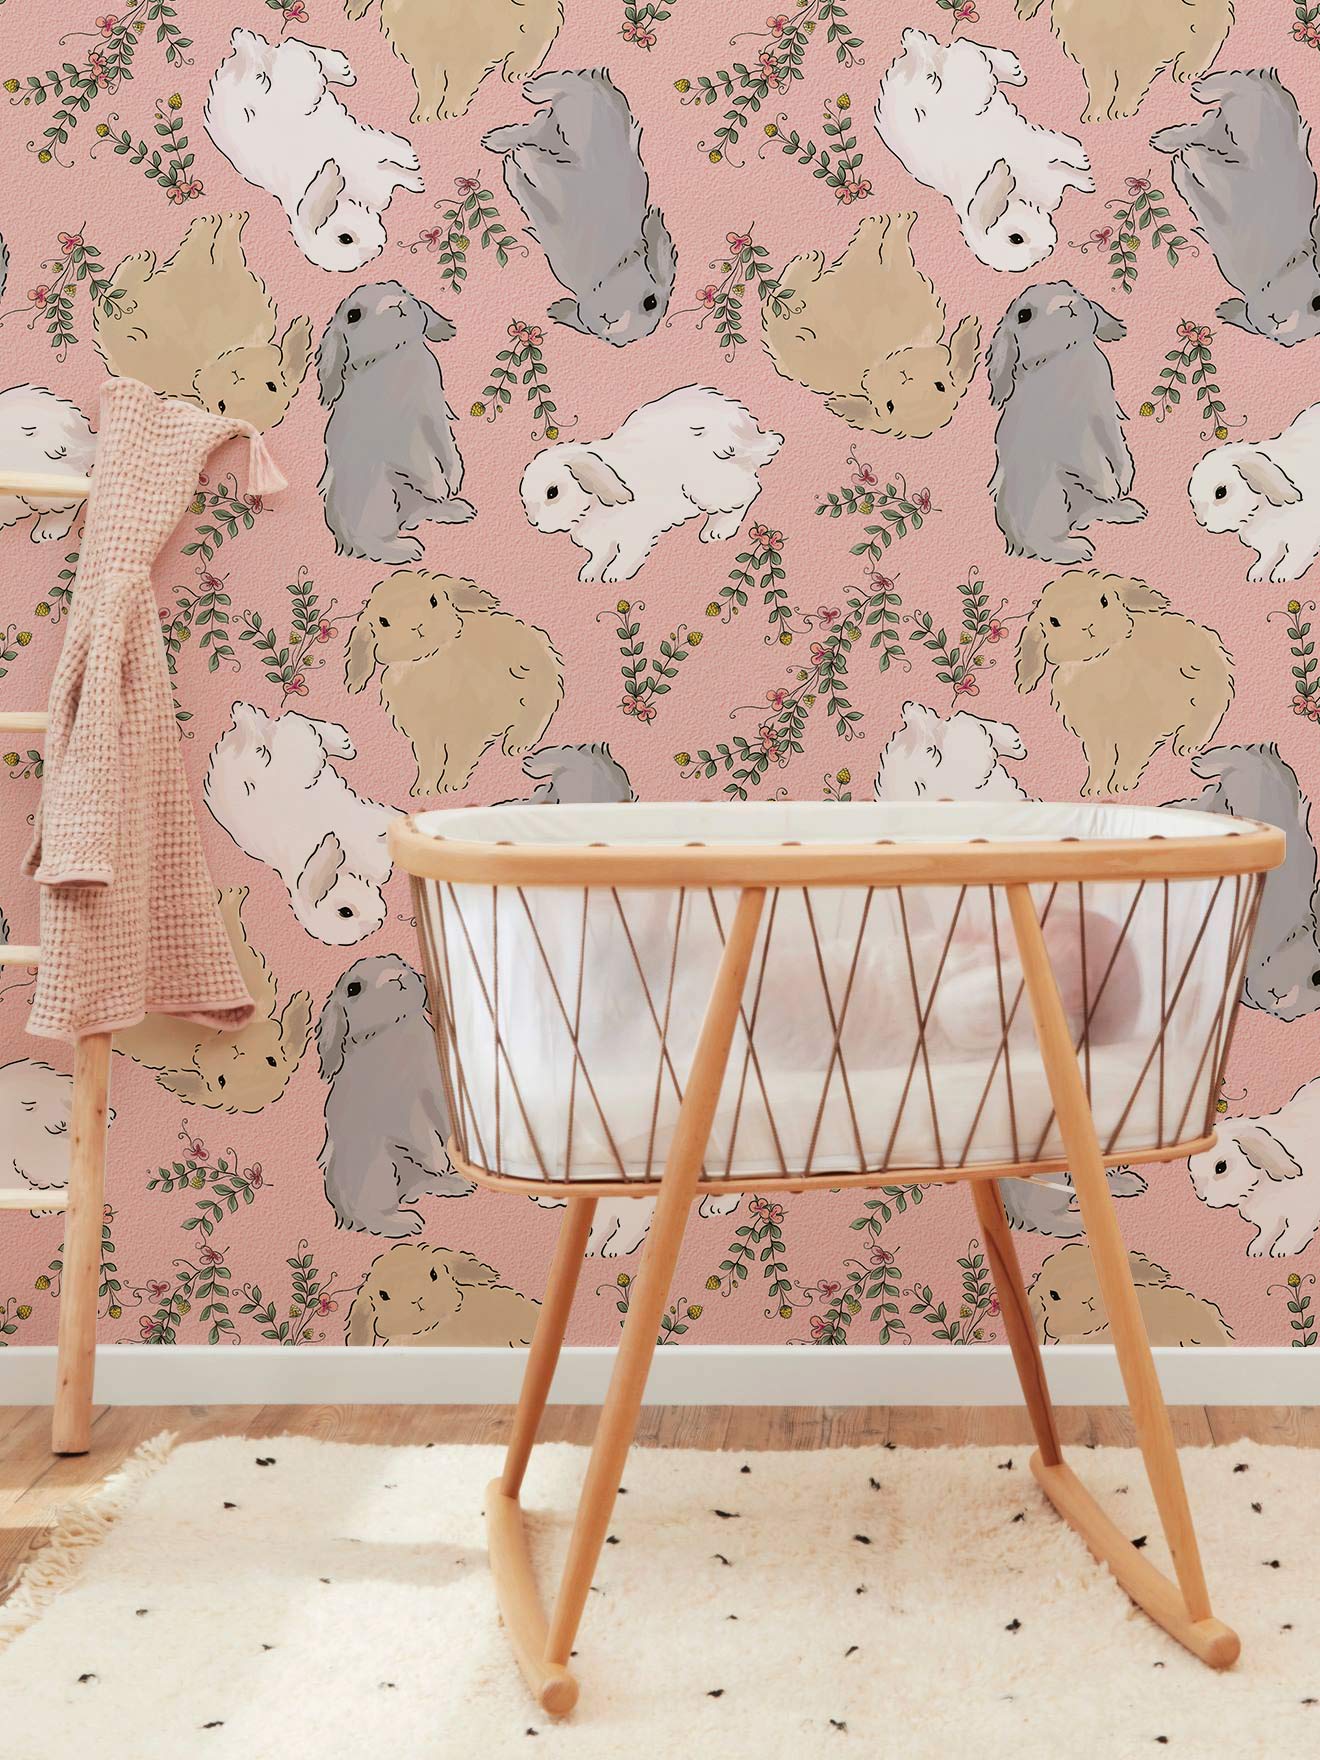 Little Rabbits Wallpaper Mural Home Interior Decor